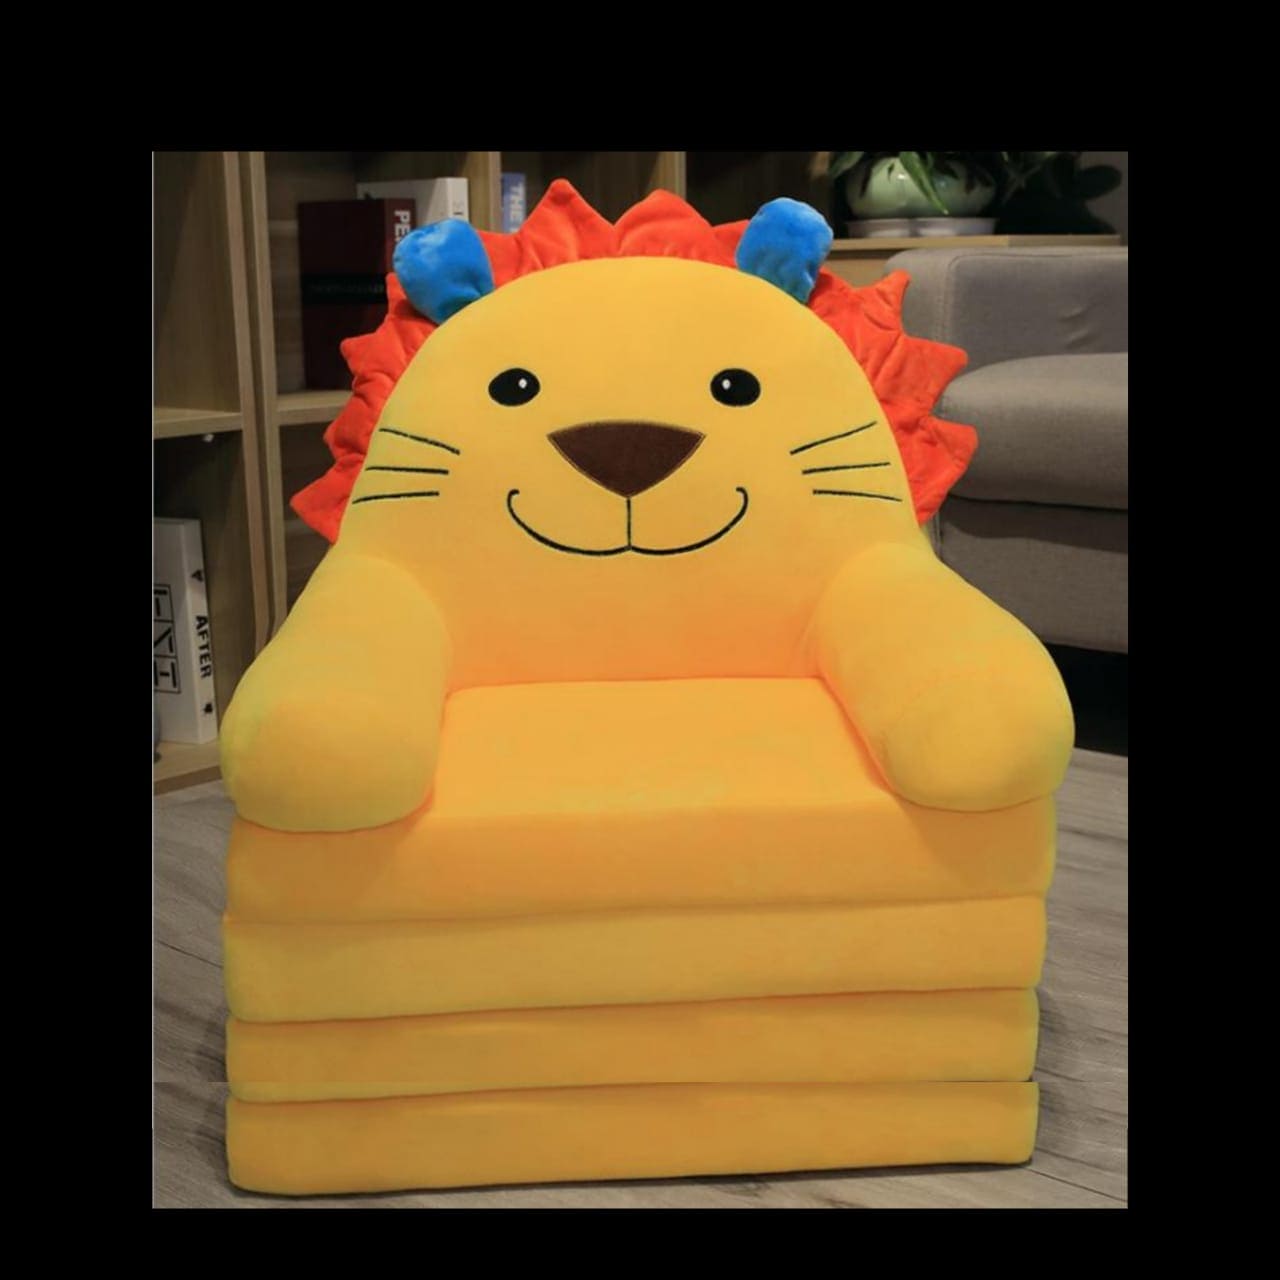 New 4 Layer Baby Sofa, Kids Folding Sofa Bed, Cute Cartoon Sofa For Kids